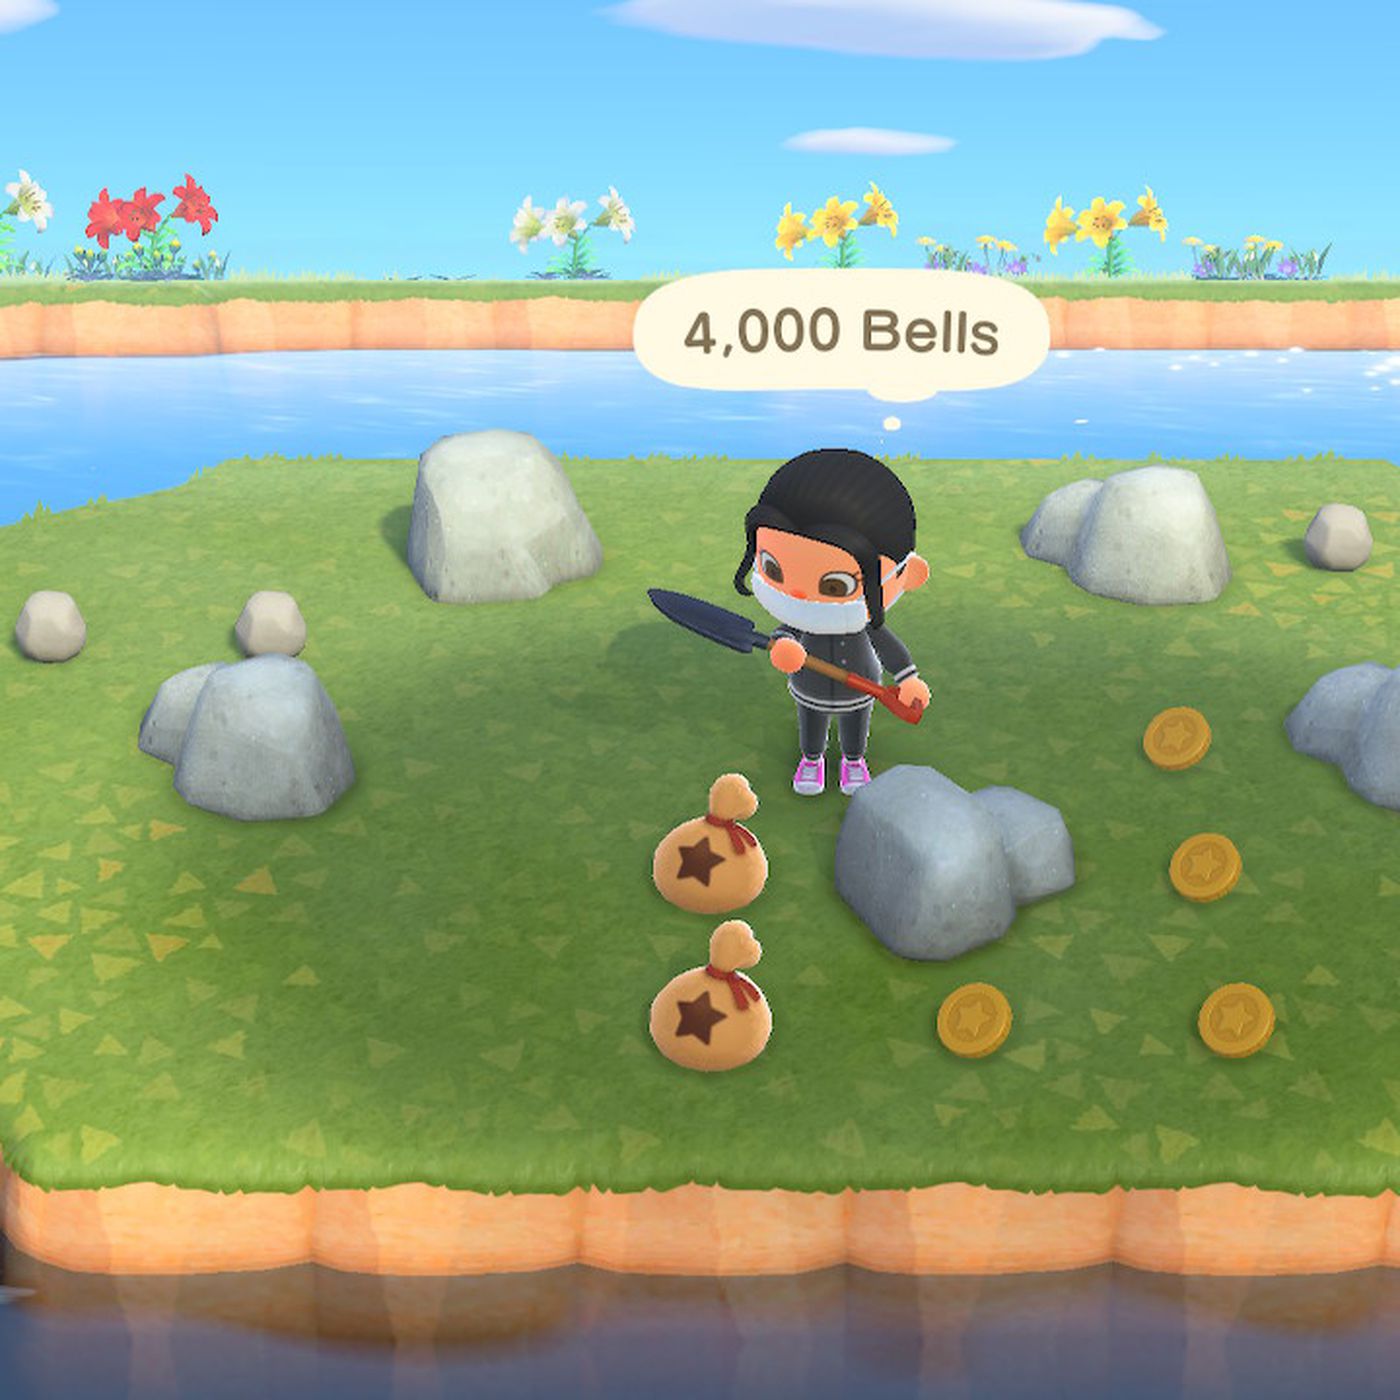 Nook Miles Ticket islands in Animal Crossing: New Horizons - Polygon